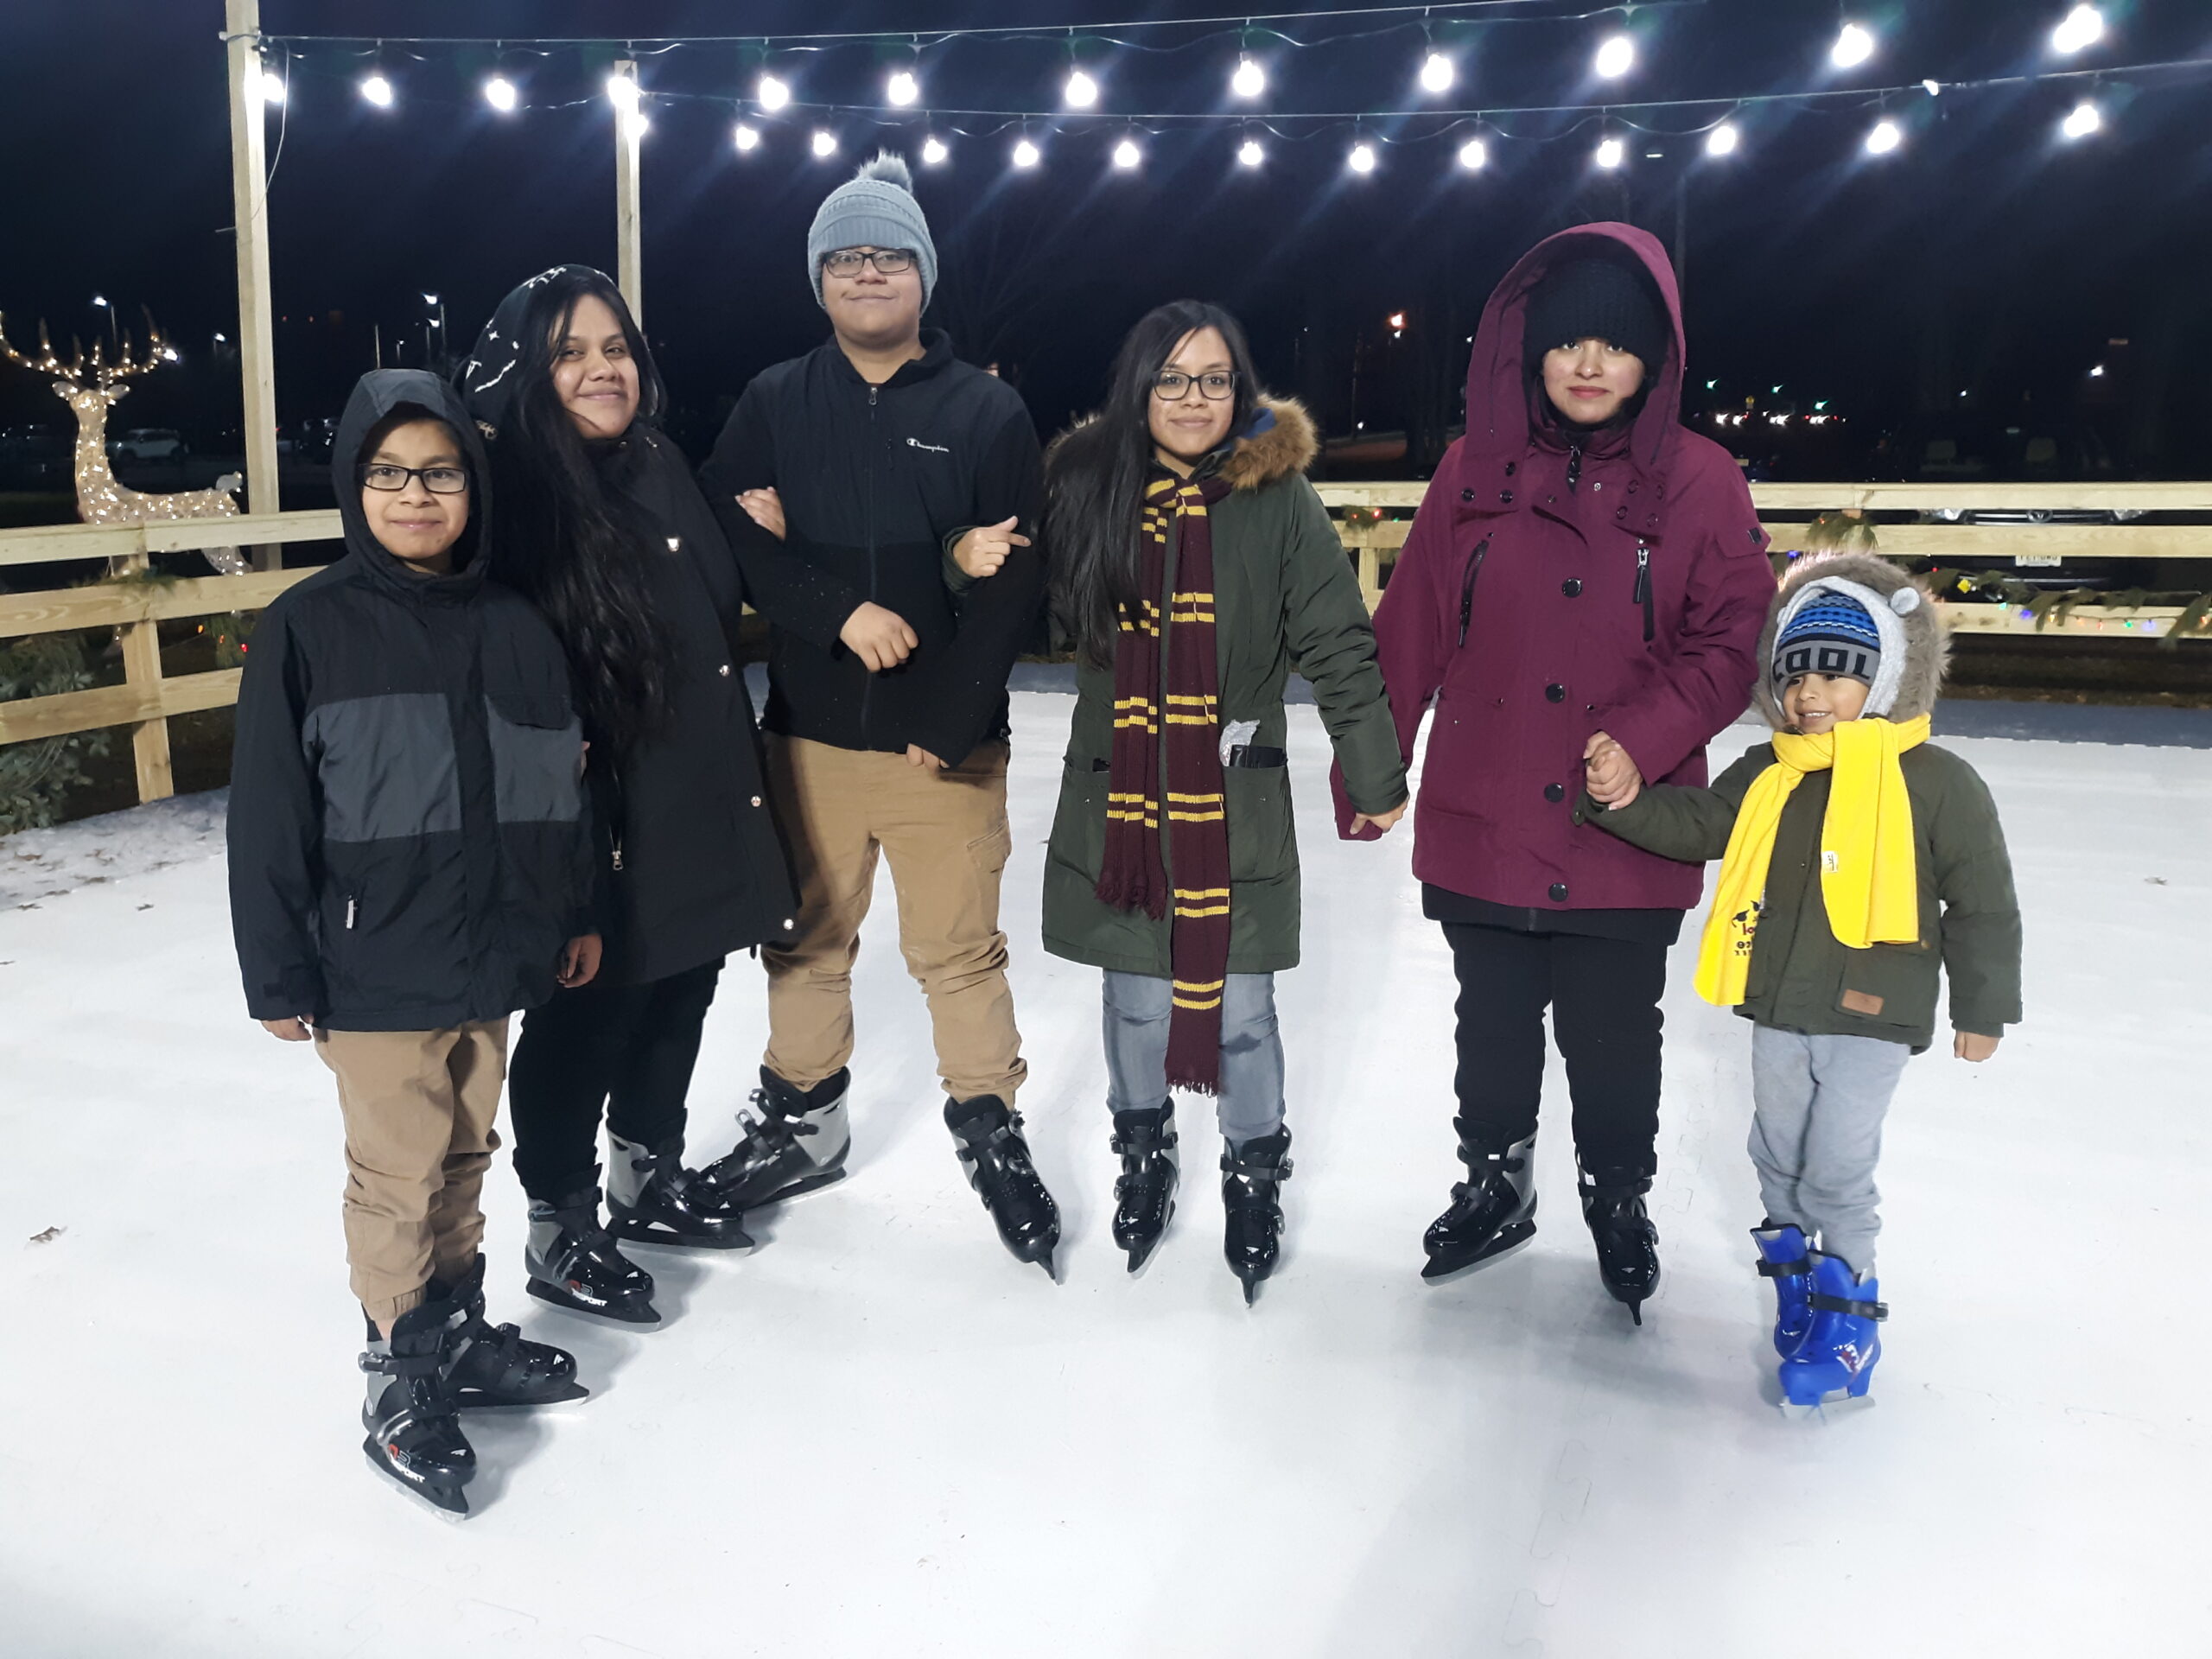 Family fun at the North Brunswick Ice Rink